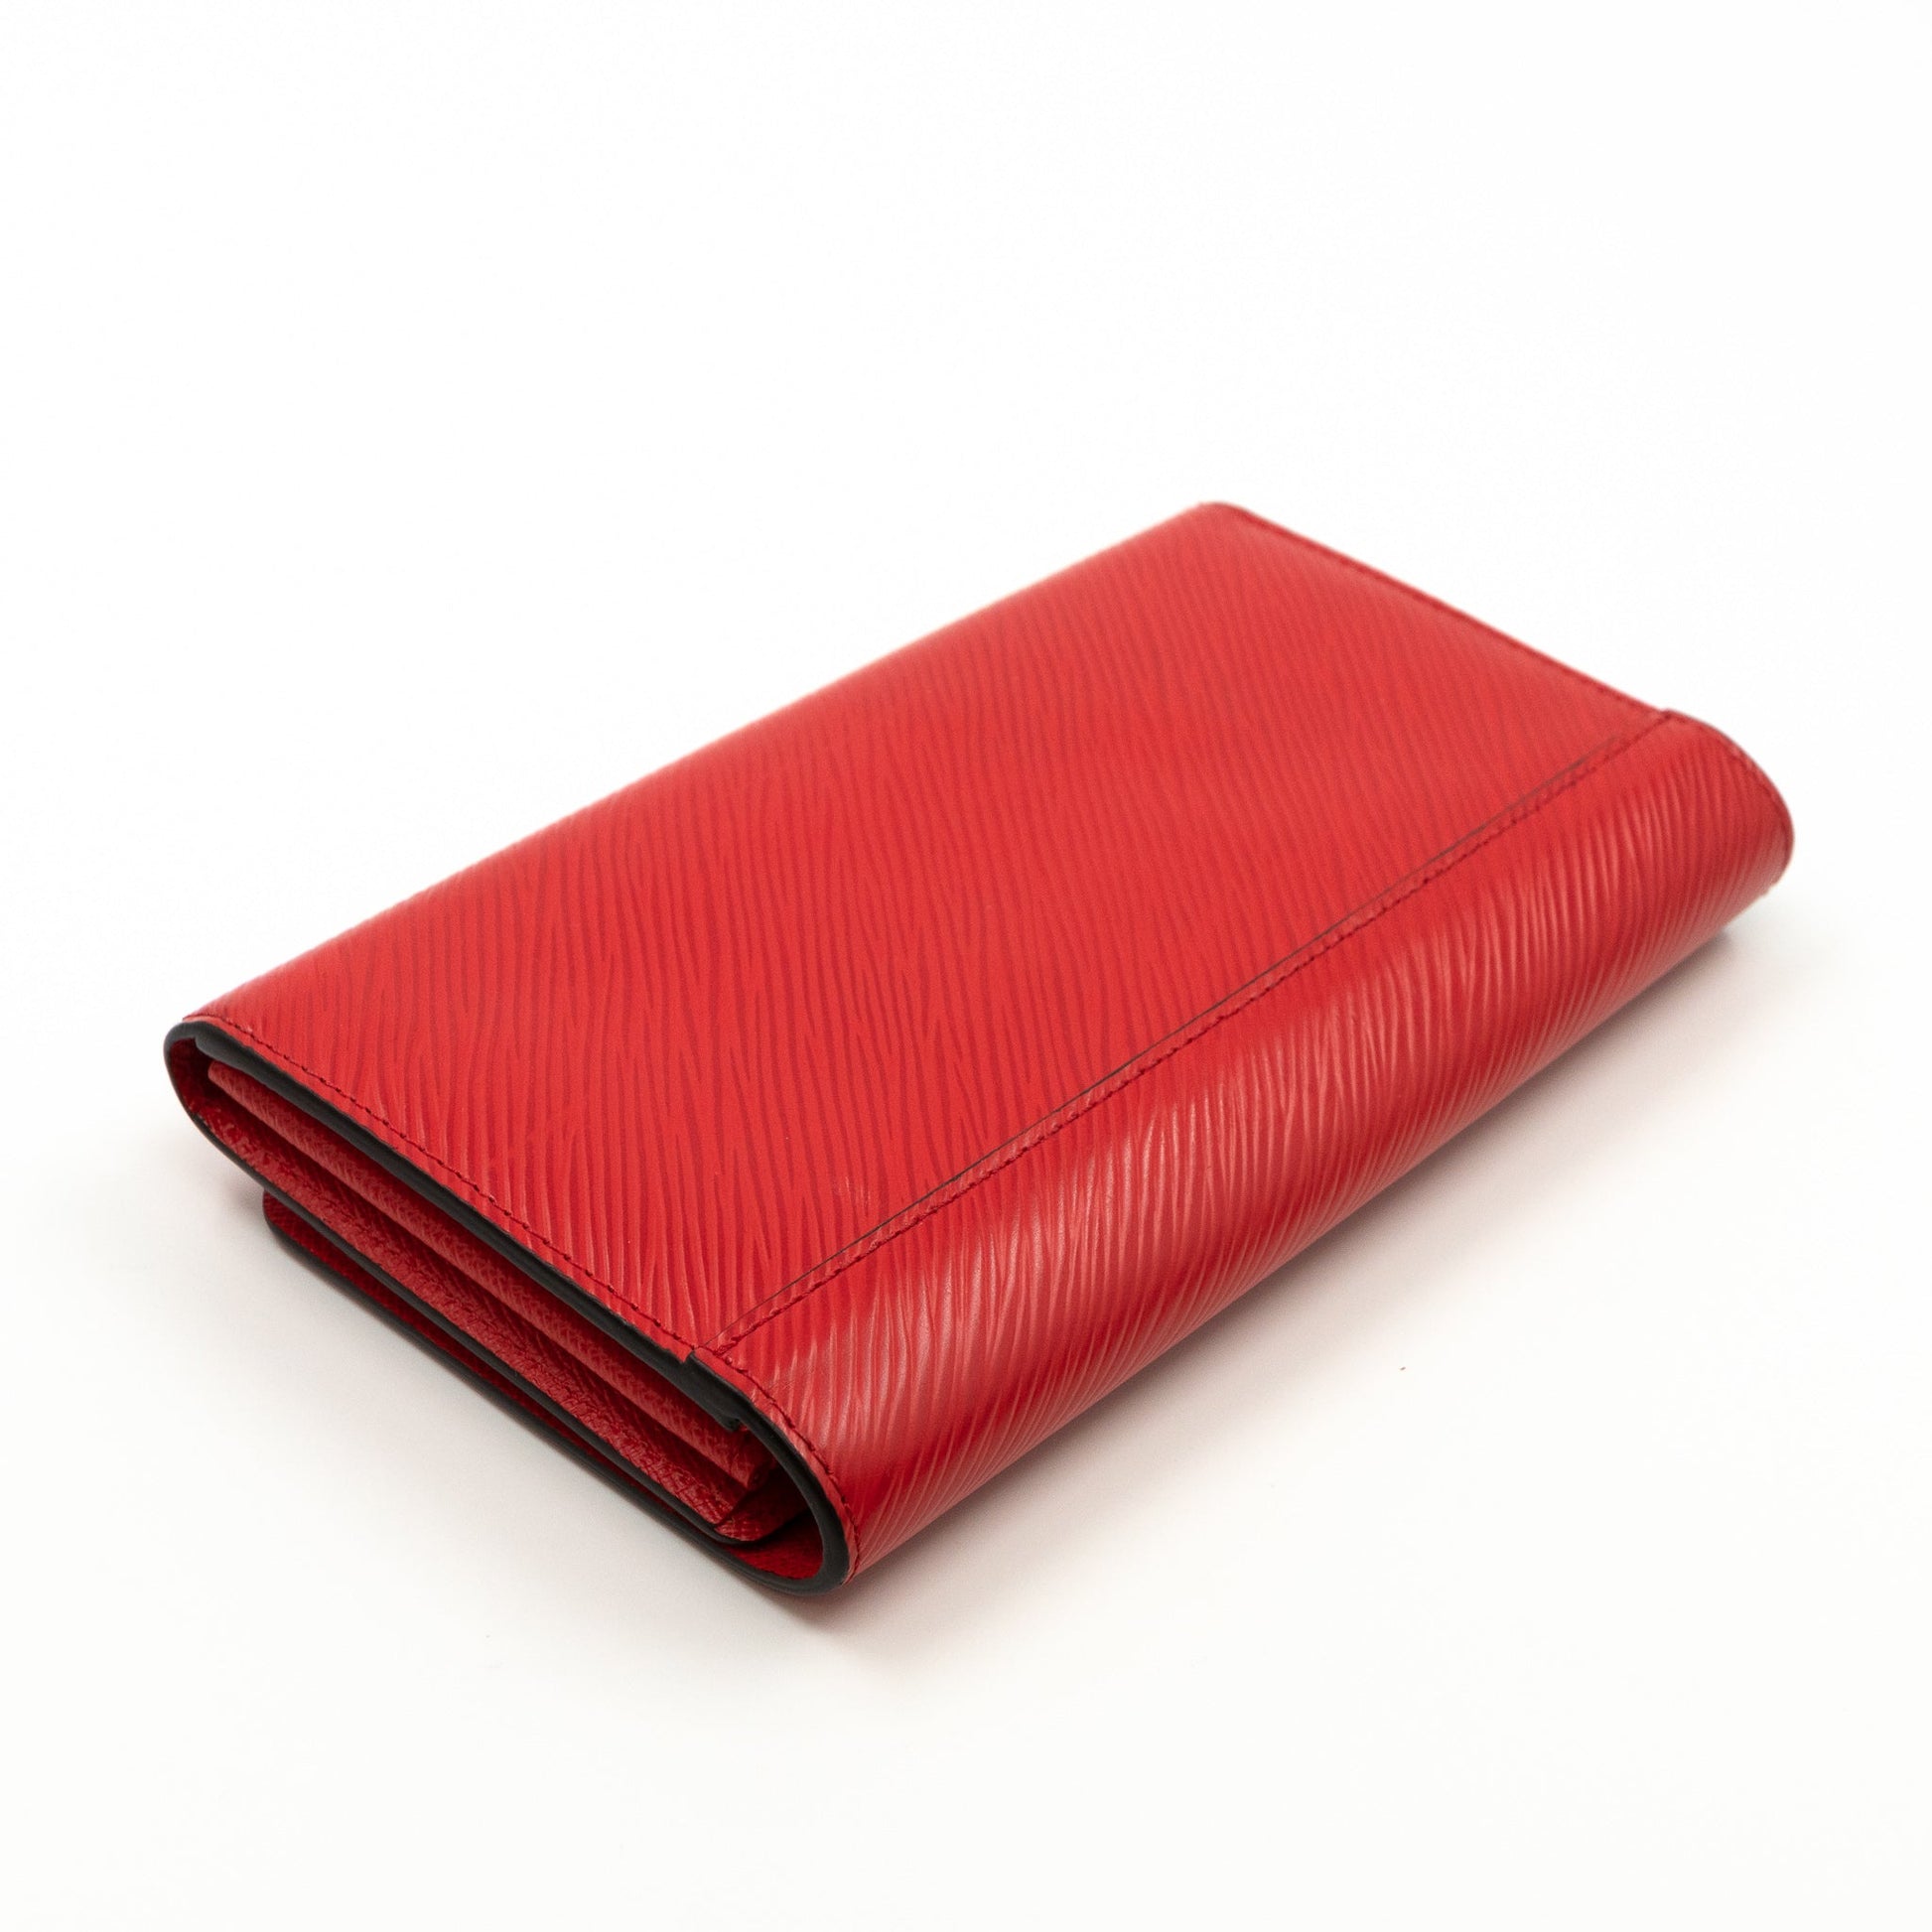 Louis Vuitton – Louis Vuitton Twist Wallet Black Epi Leather Red